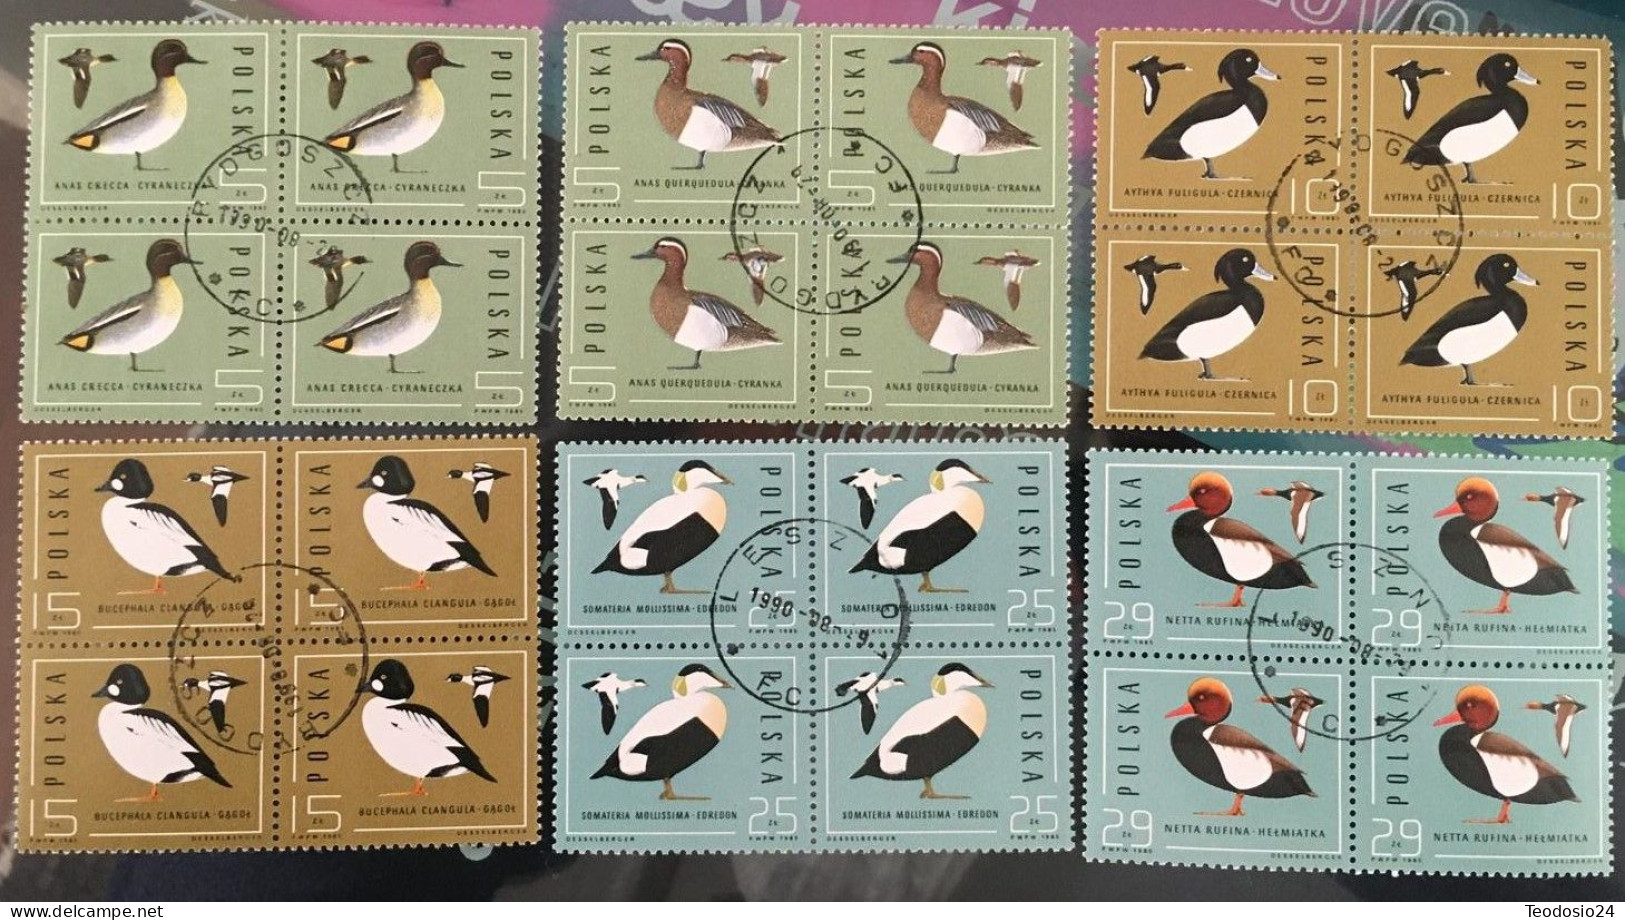 Polonia POLAND  1985 - Wild Ducks - Mi 2998-3003 - Used Bl4 - Unused Stamps